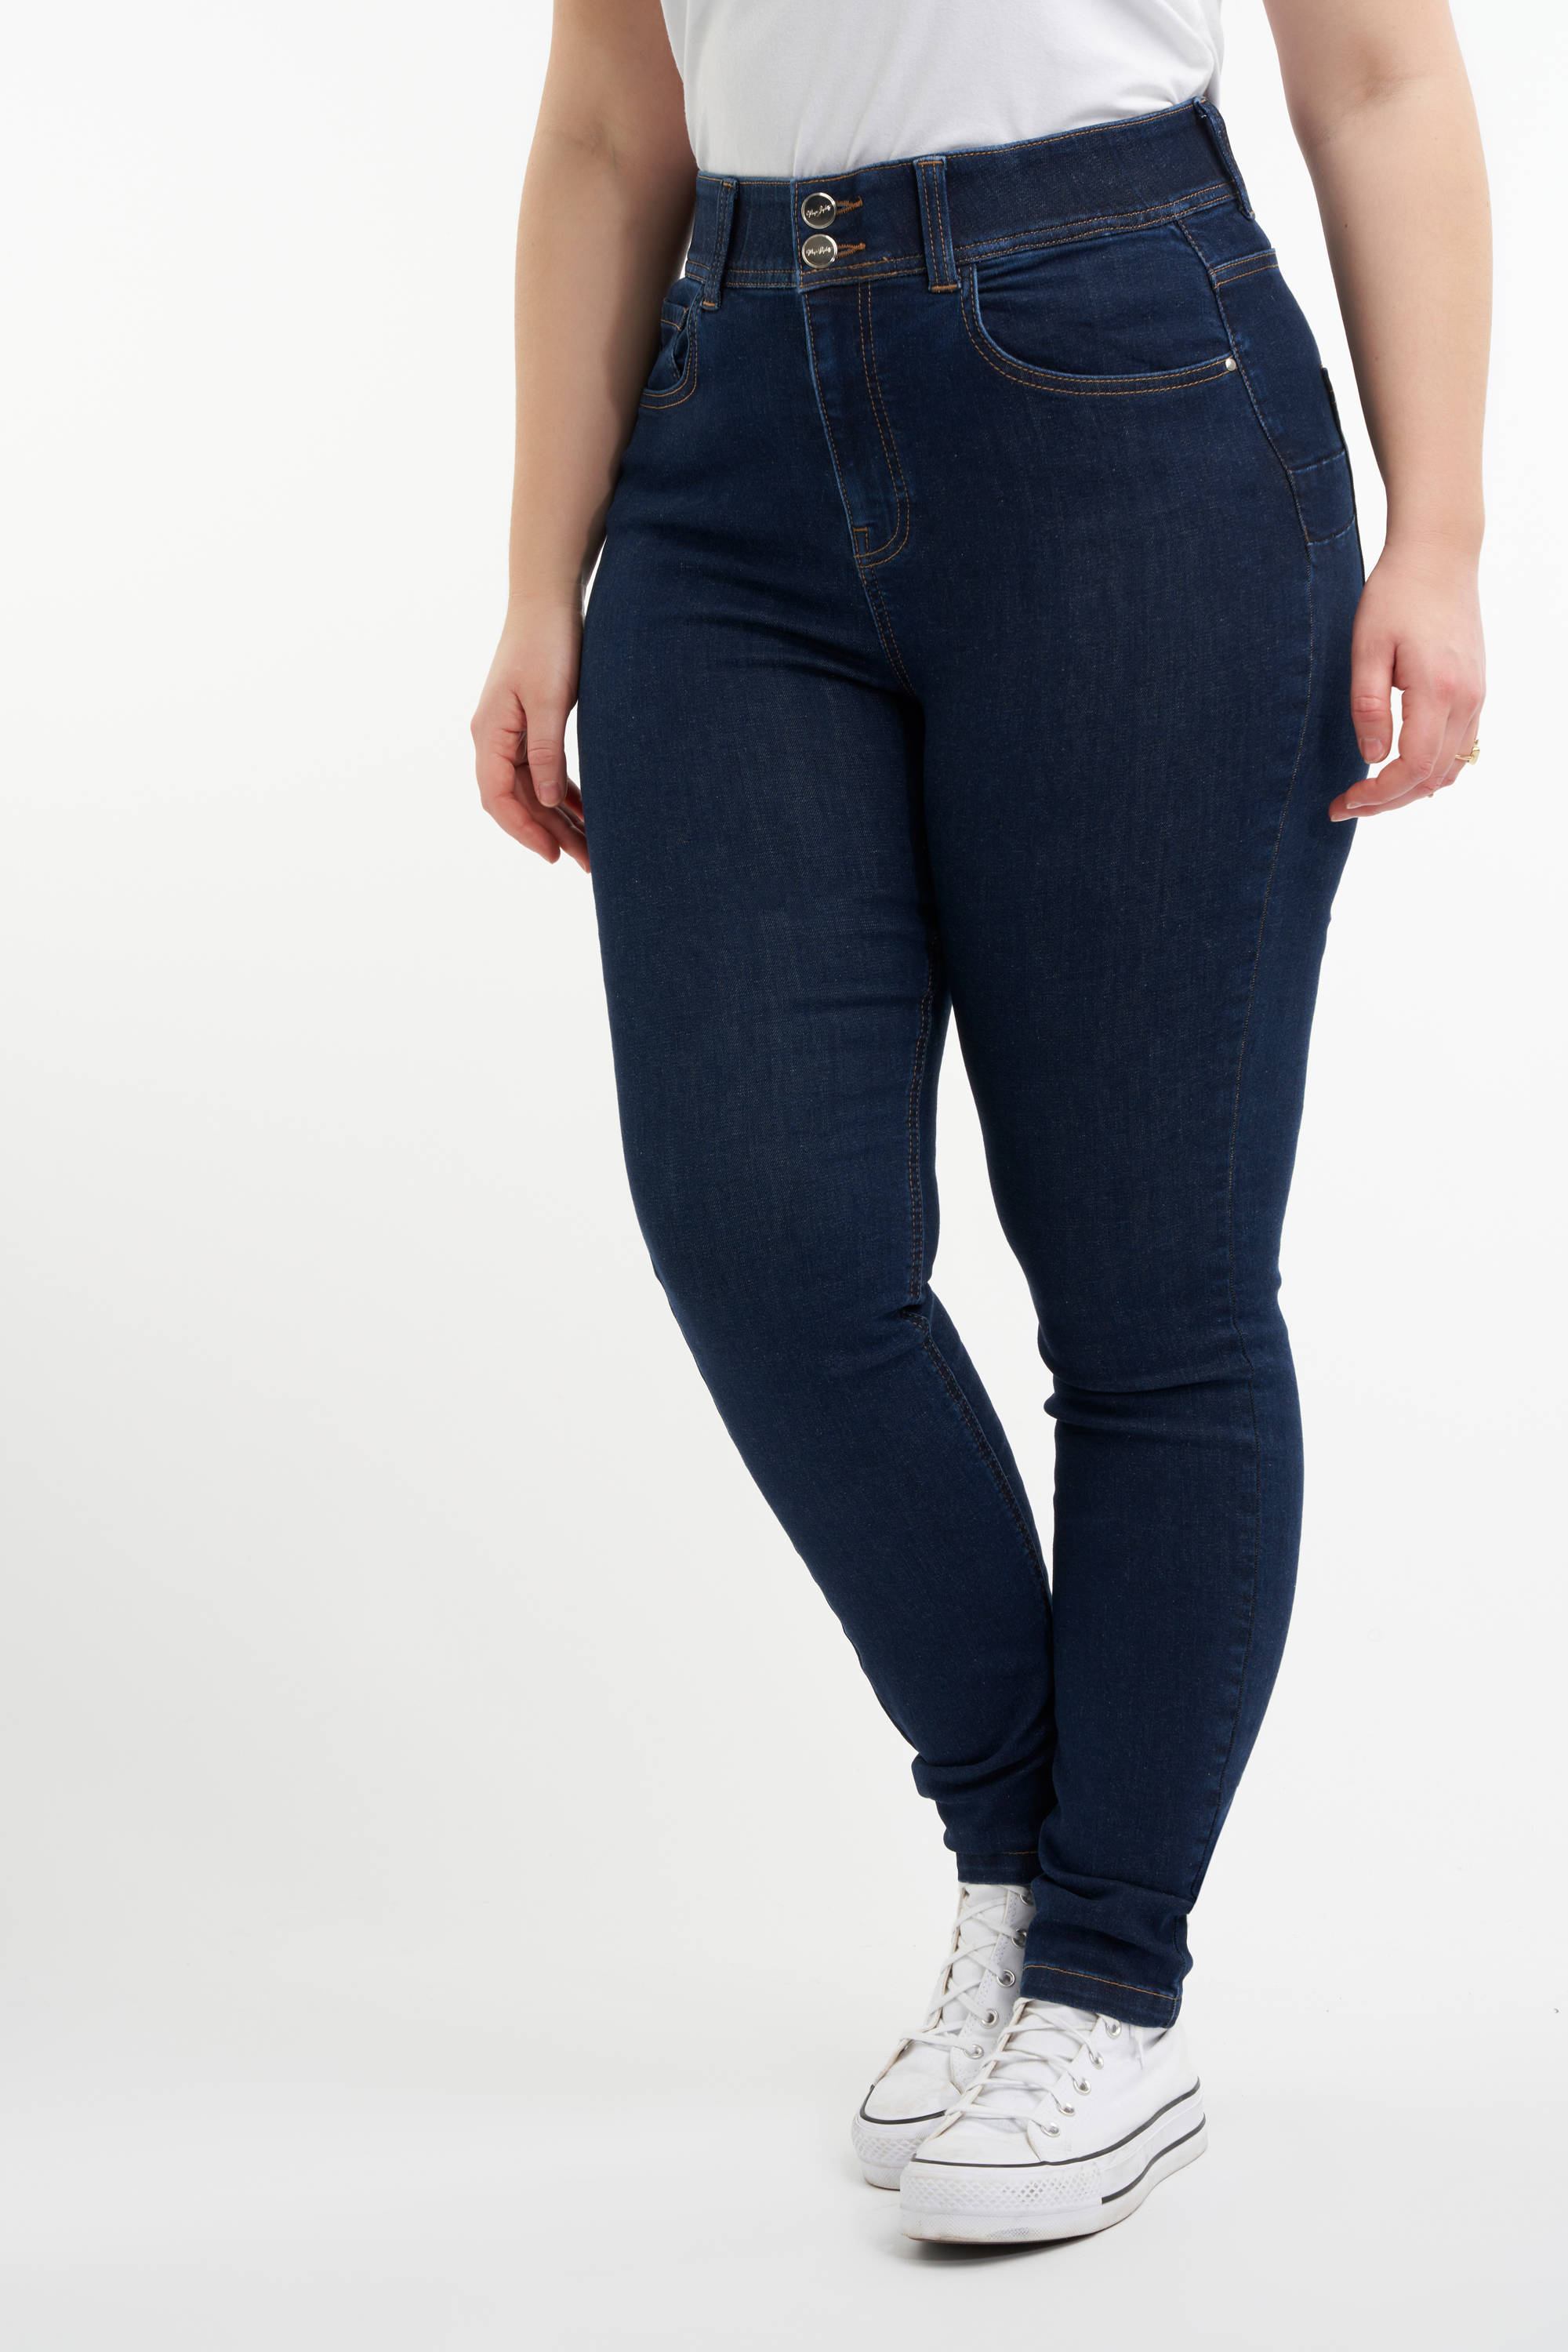 miss miss Stretch jeans blauw casual uitstraling Mode Spijkerbroeken Stretch jeans 